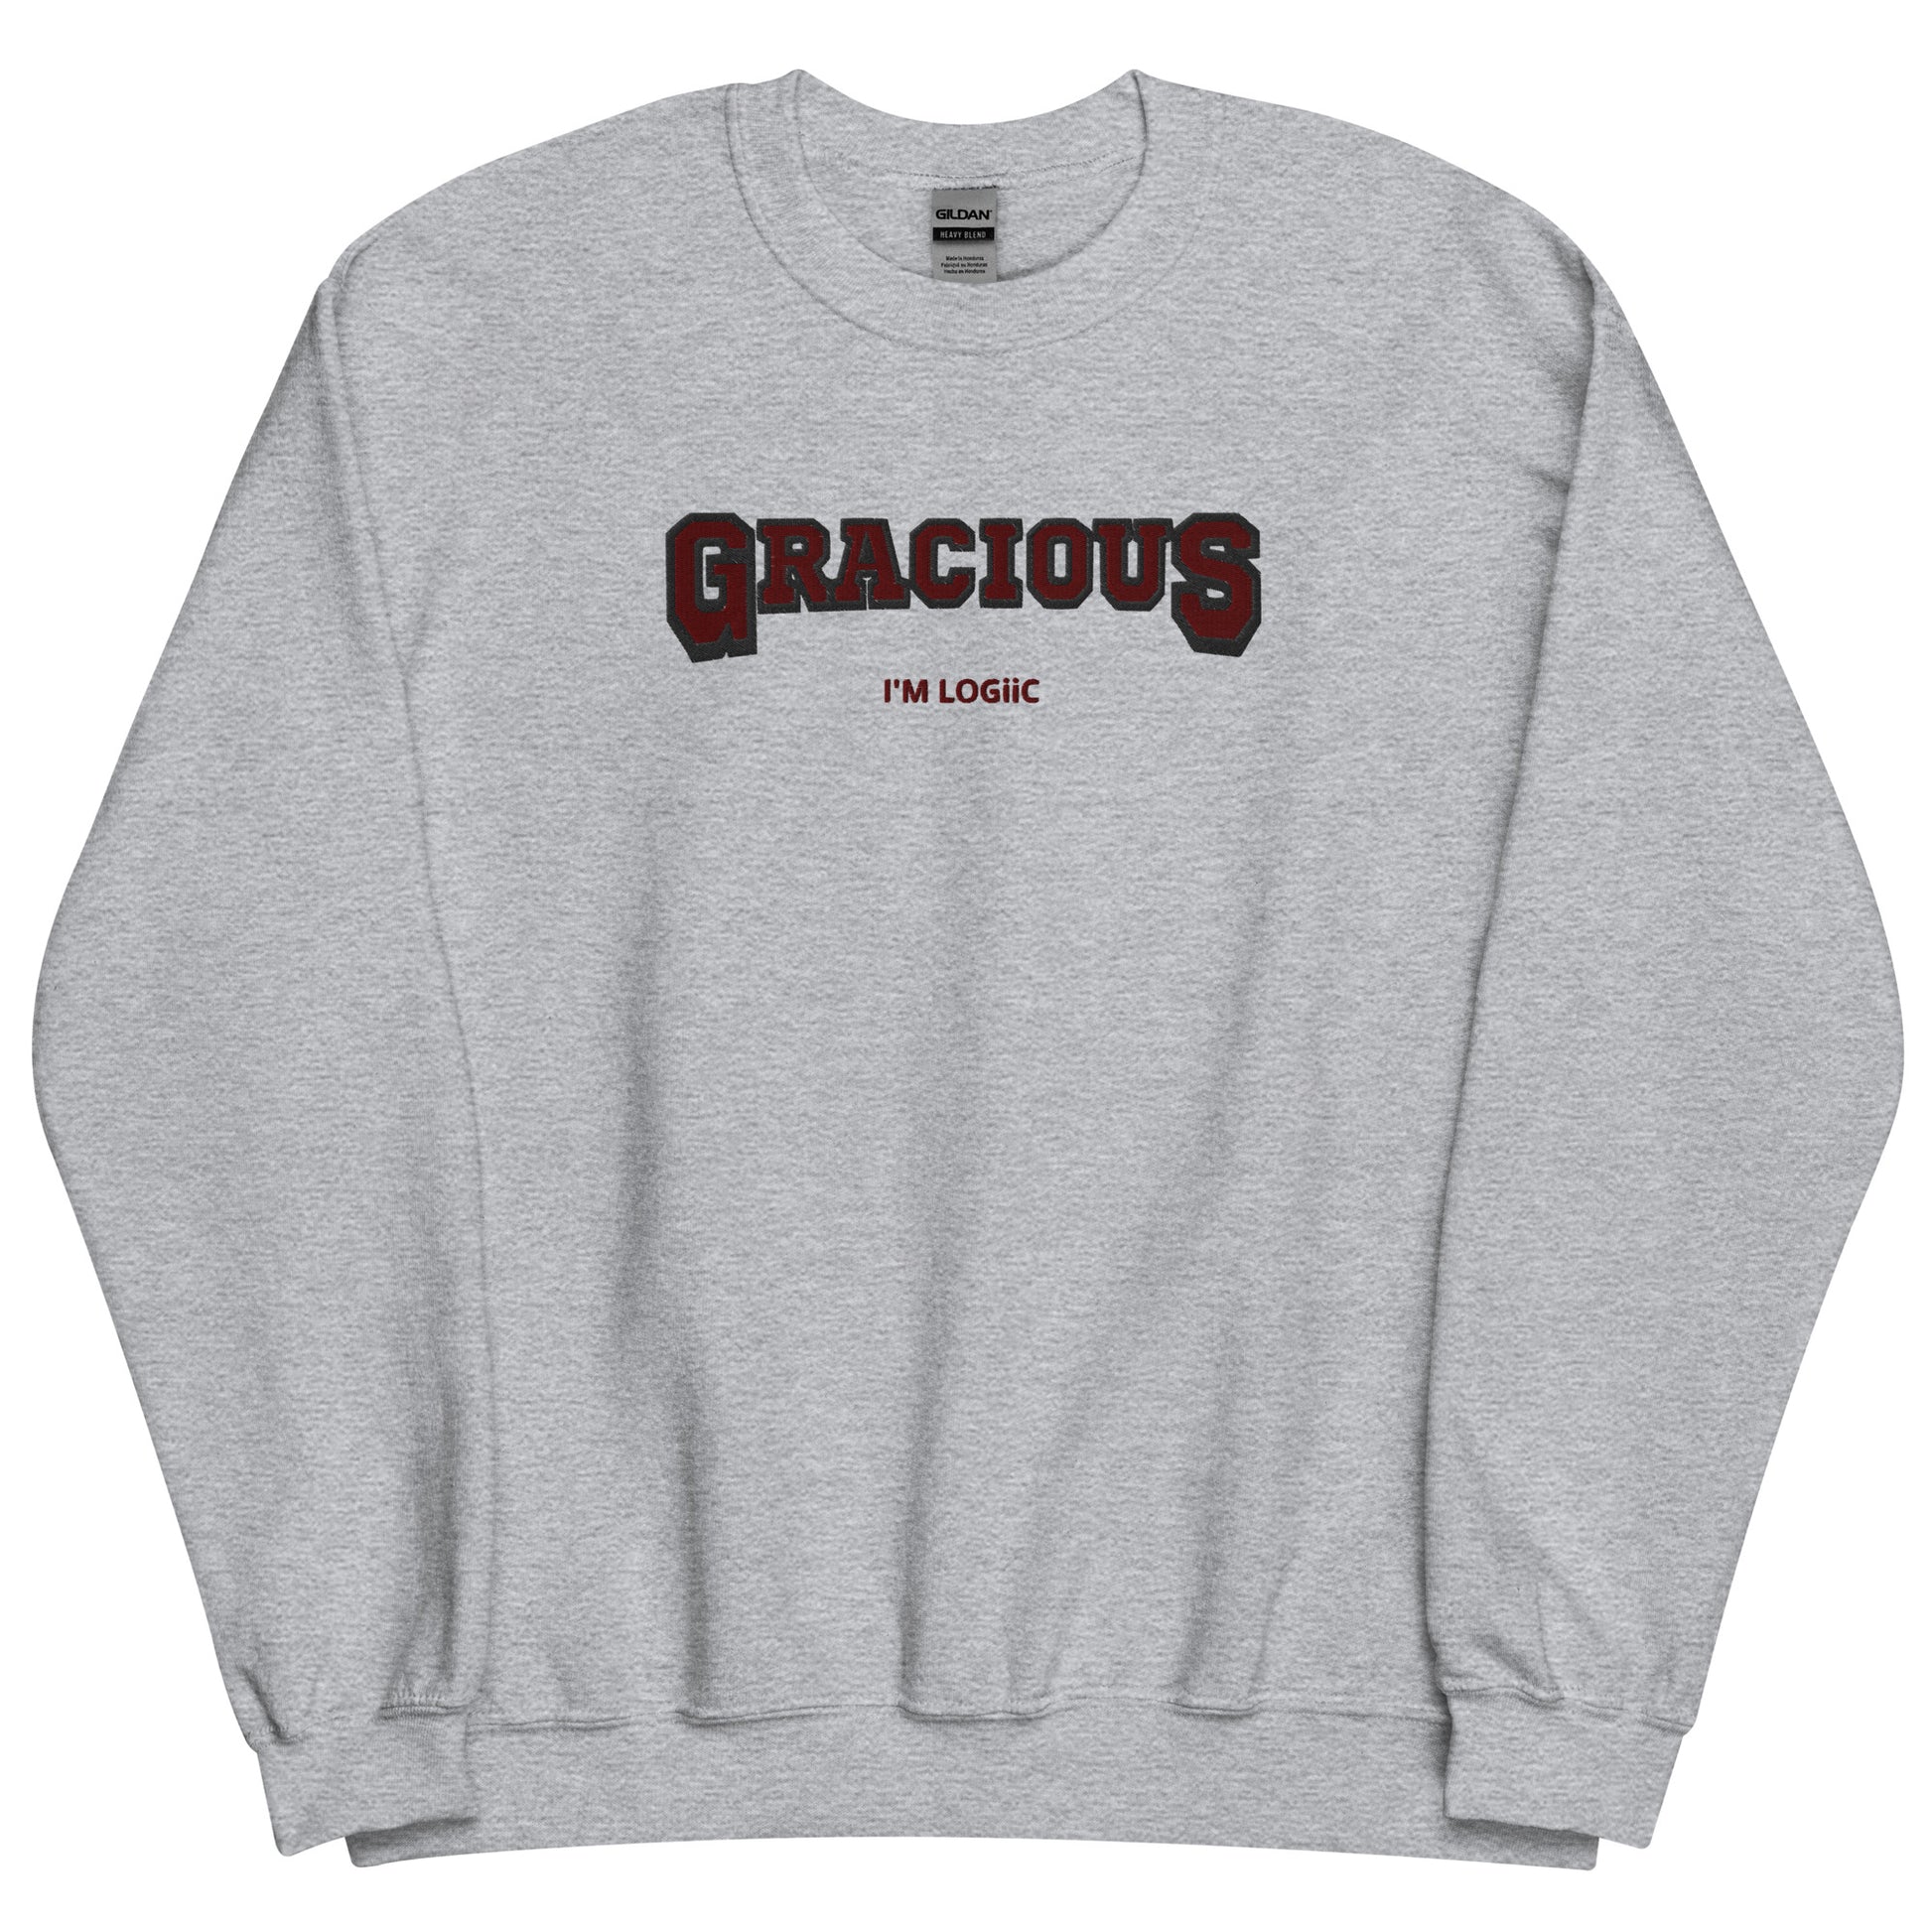 Gracious Unisex Sweatshirt - Sport Grey / S